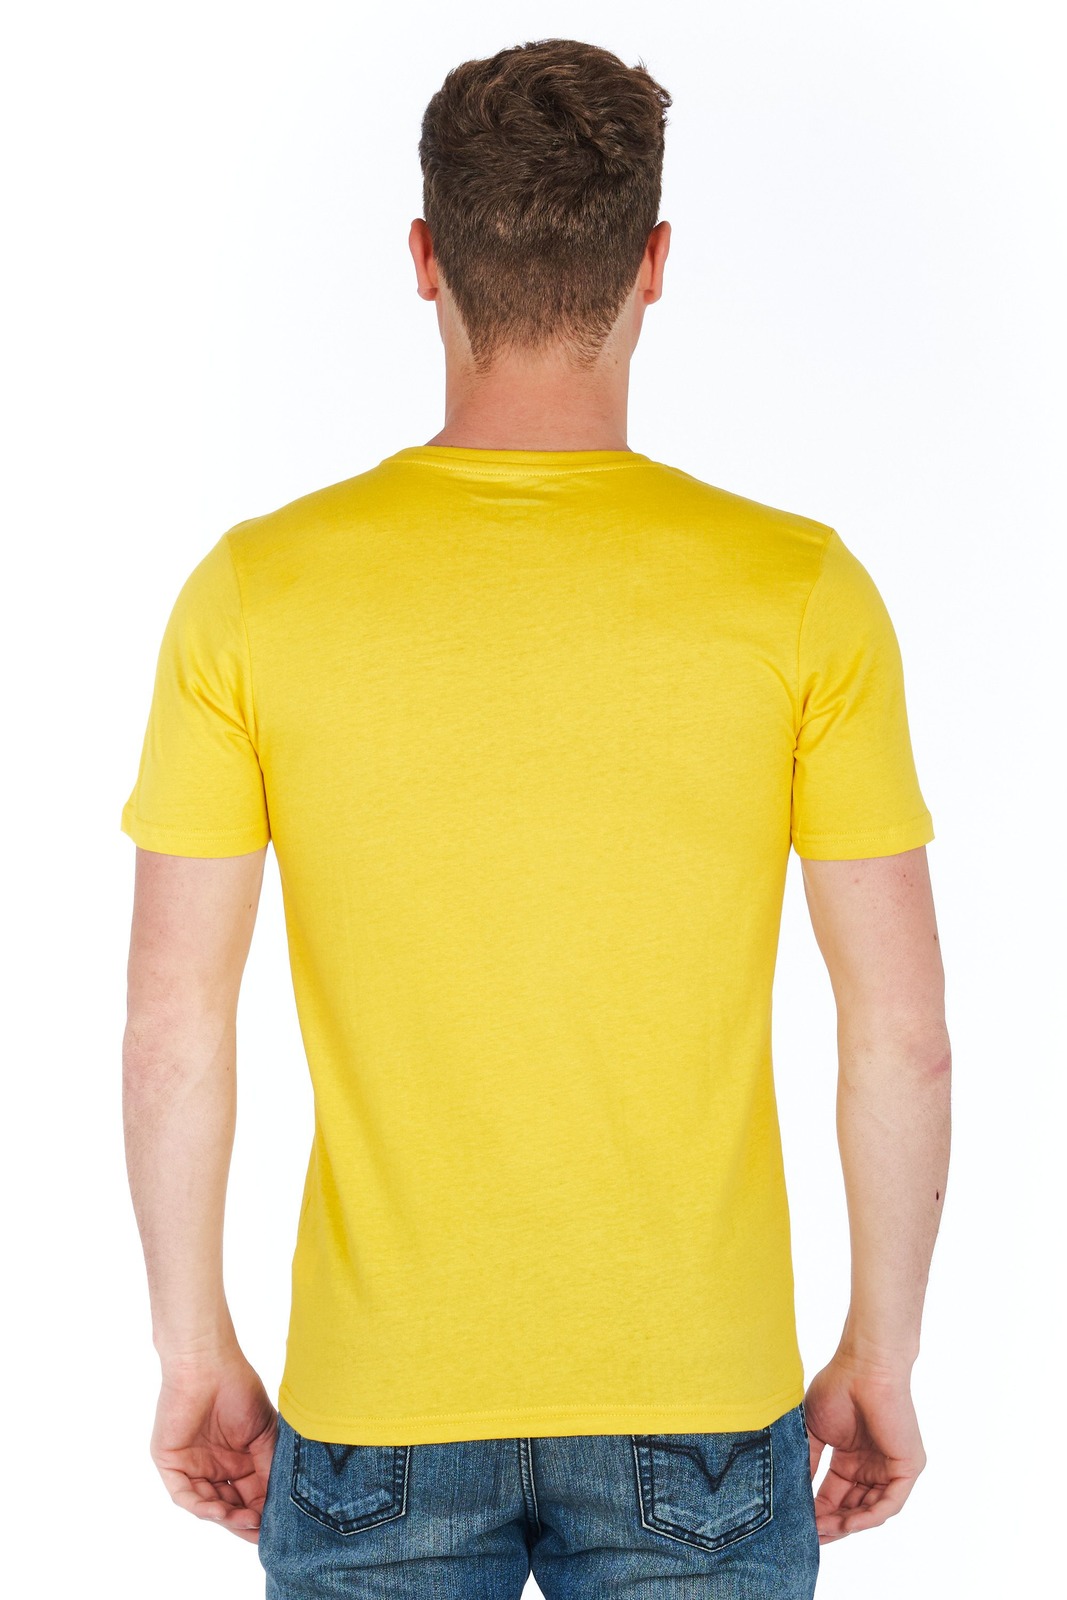 Jeckerson Yellow T-shirts for Men - LOGO